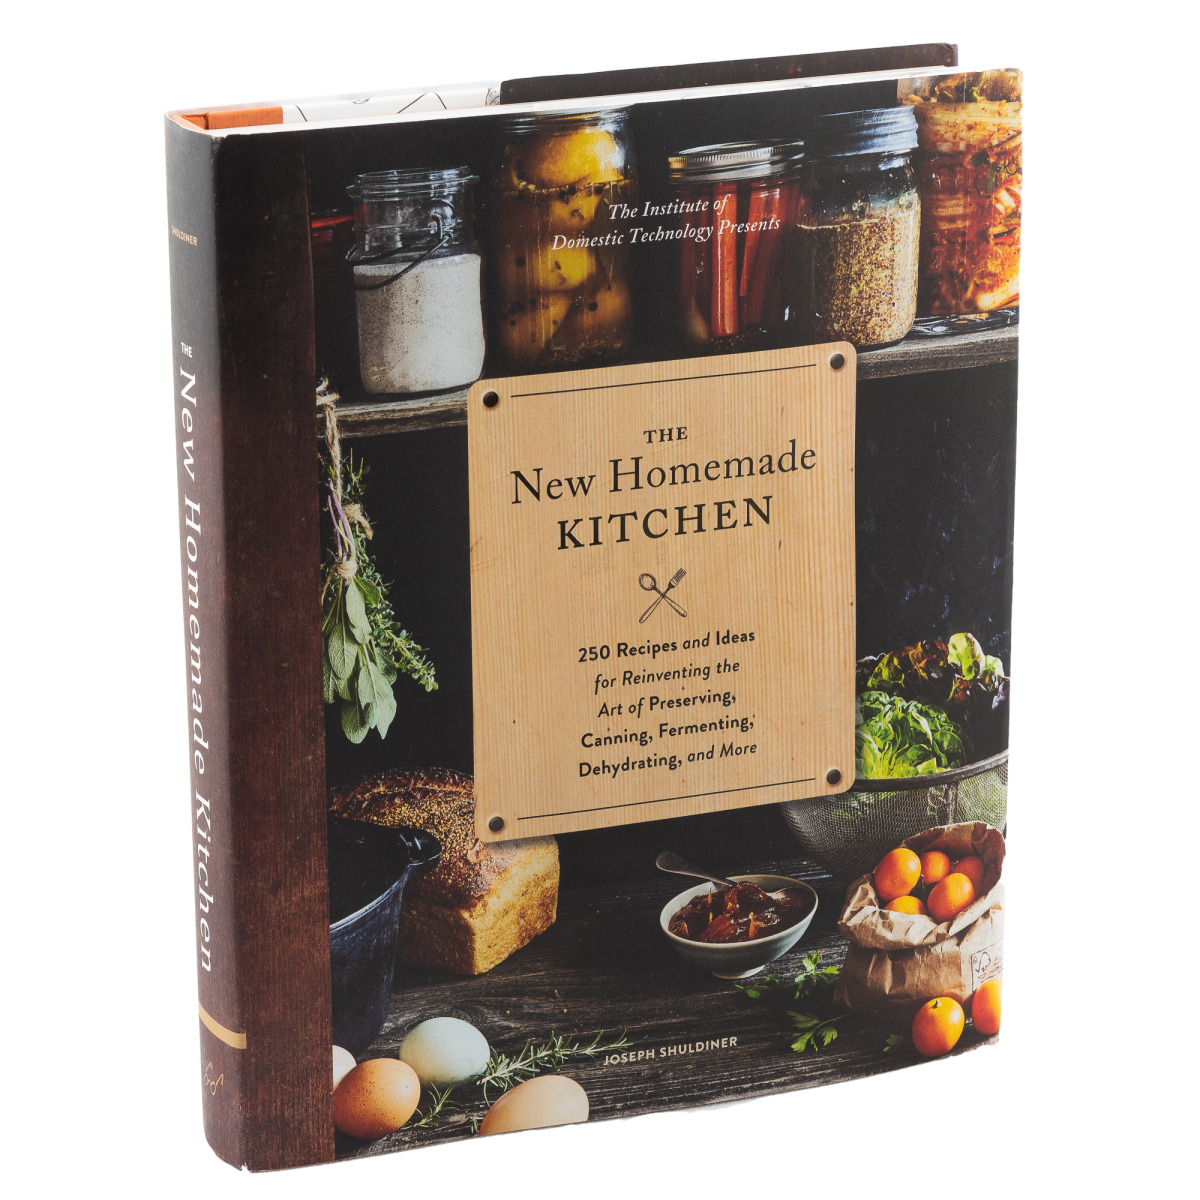 The New Homemade Kitchen by Joseph Shuldiner